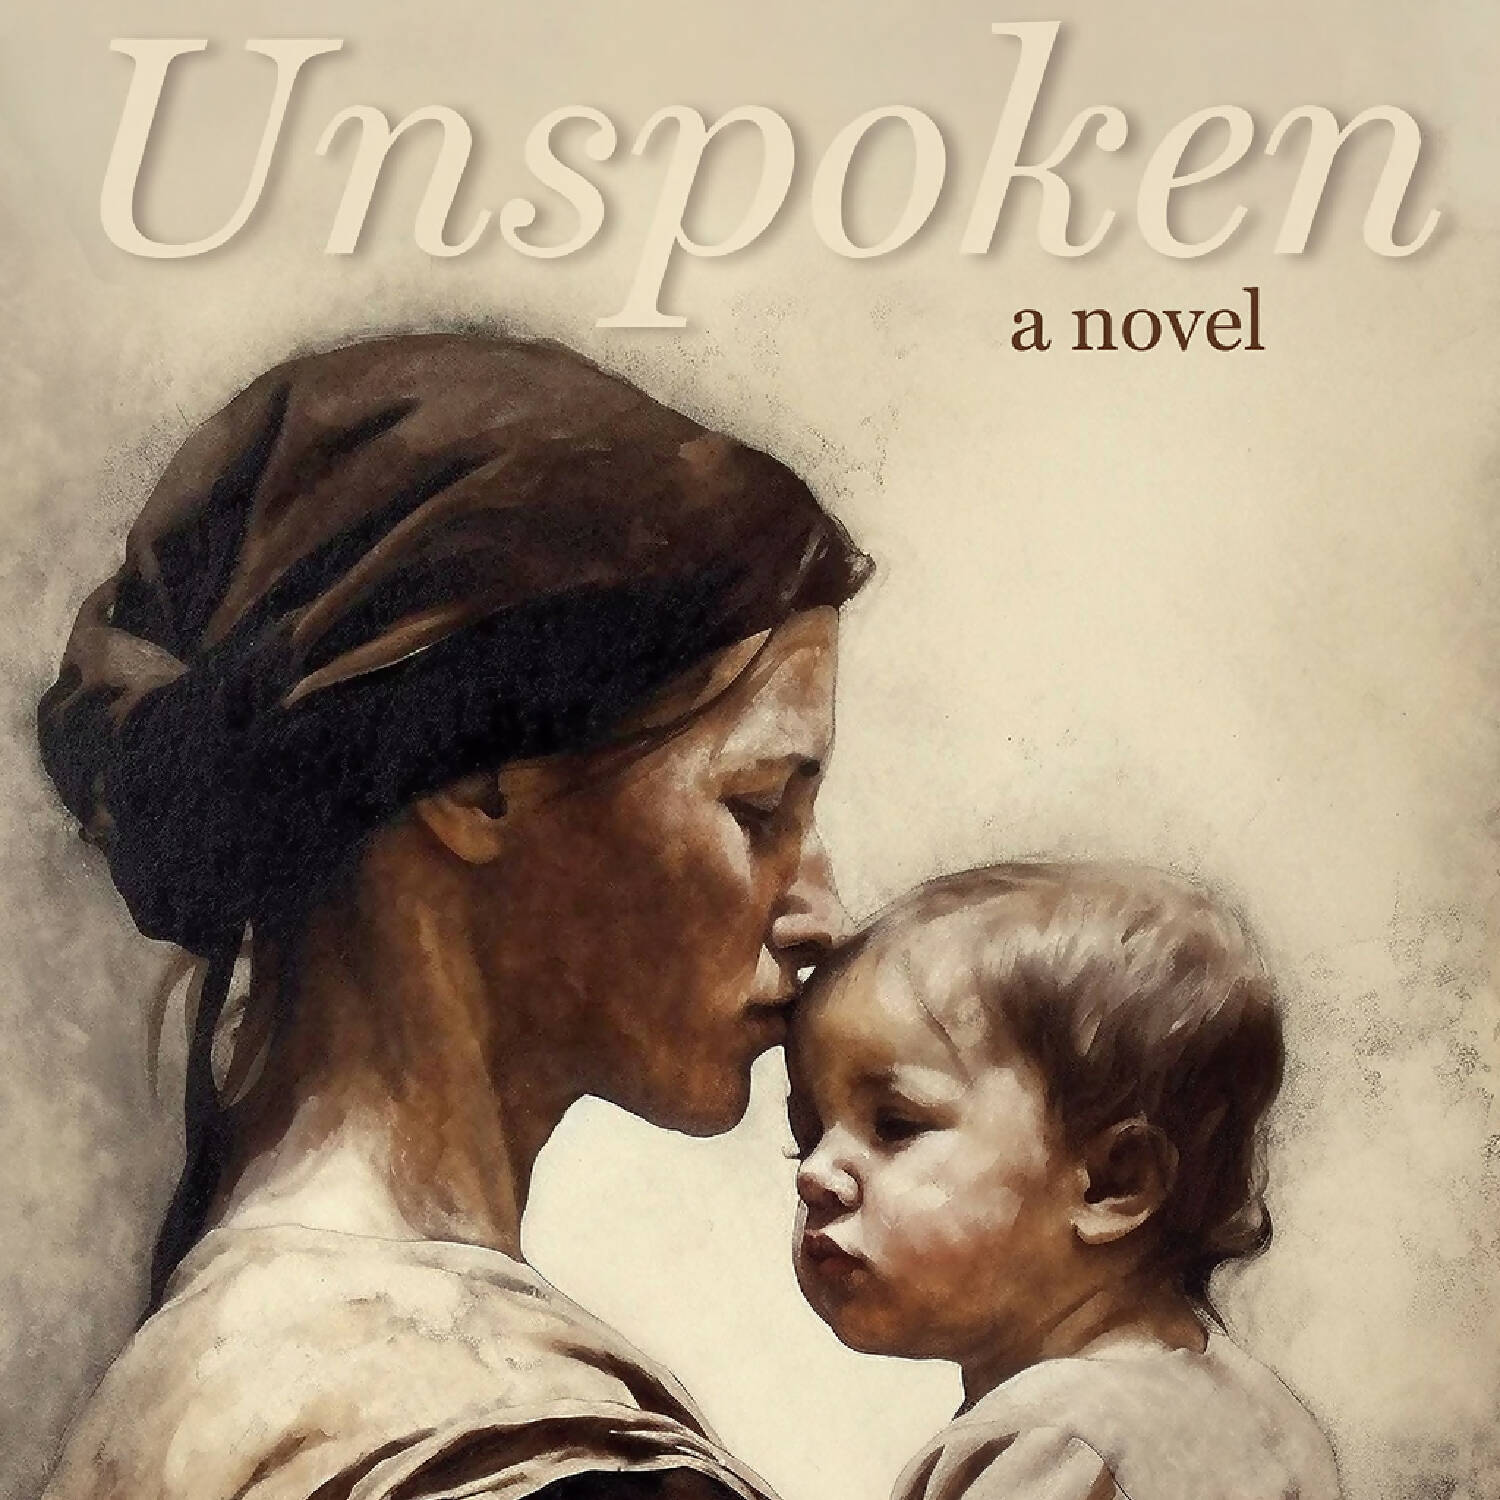 Unspoken, a novel